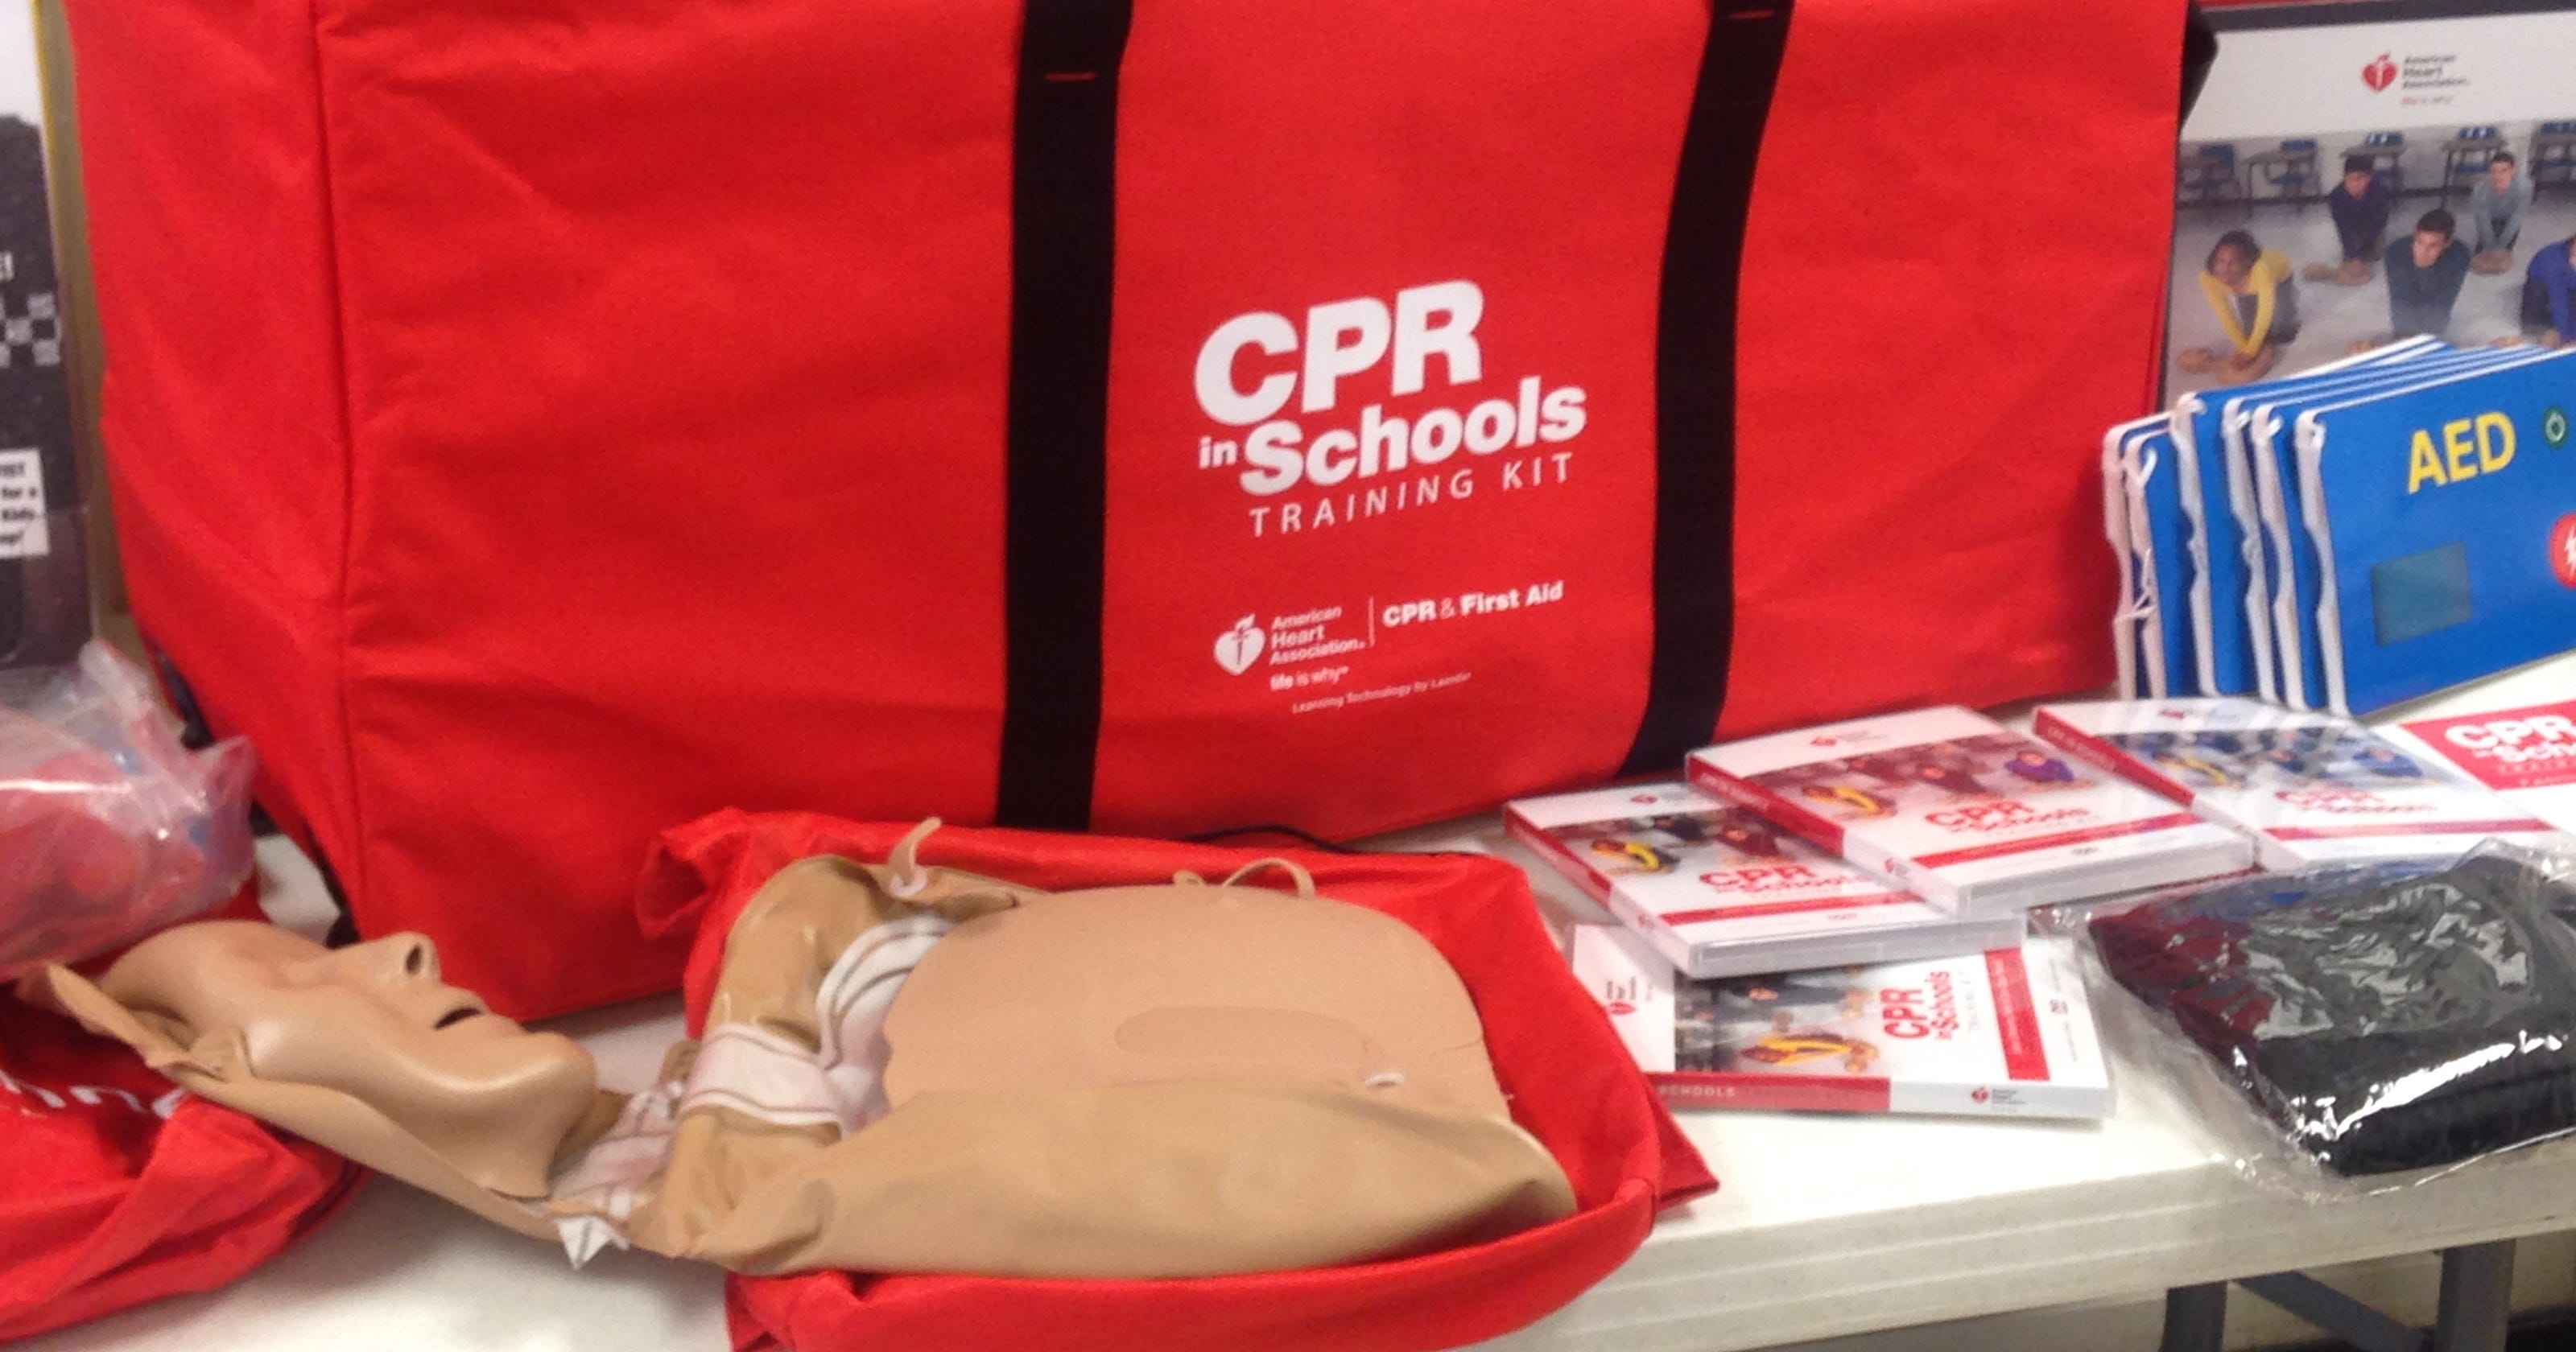 High schools get CPR training kits